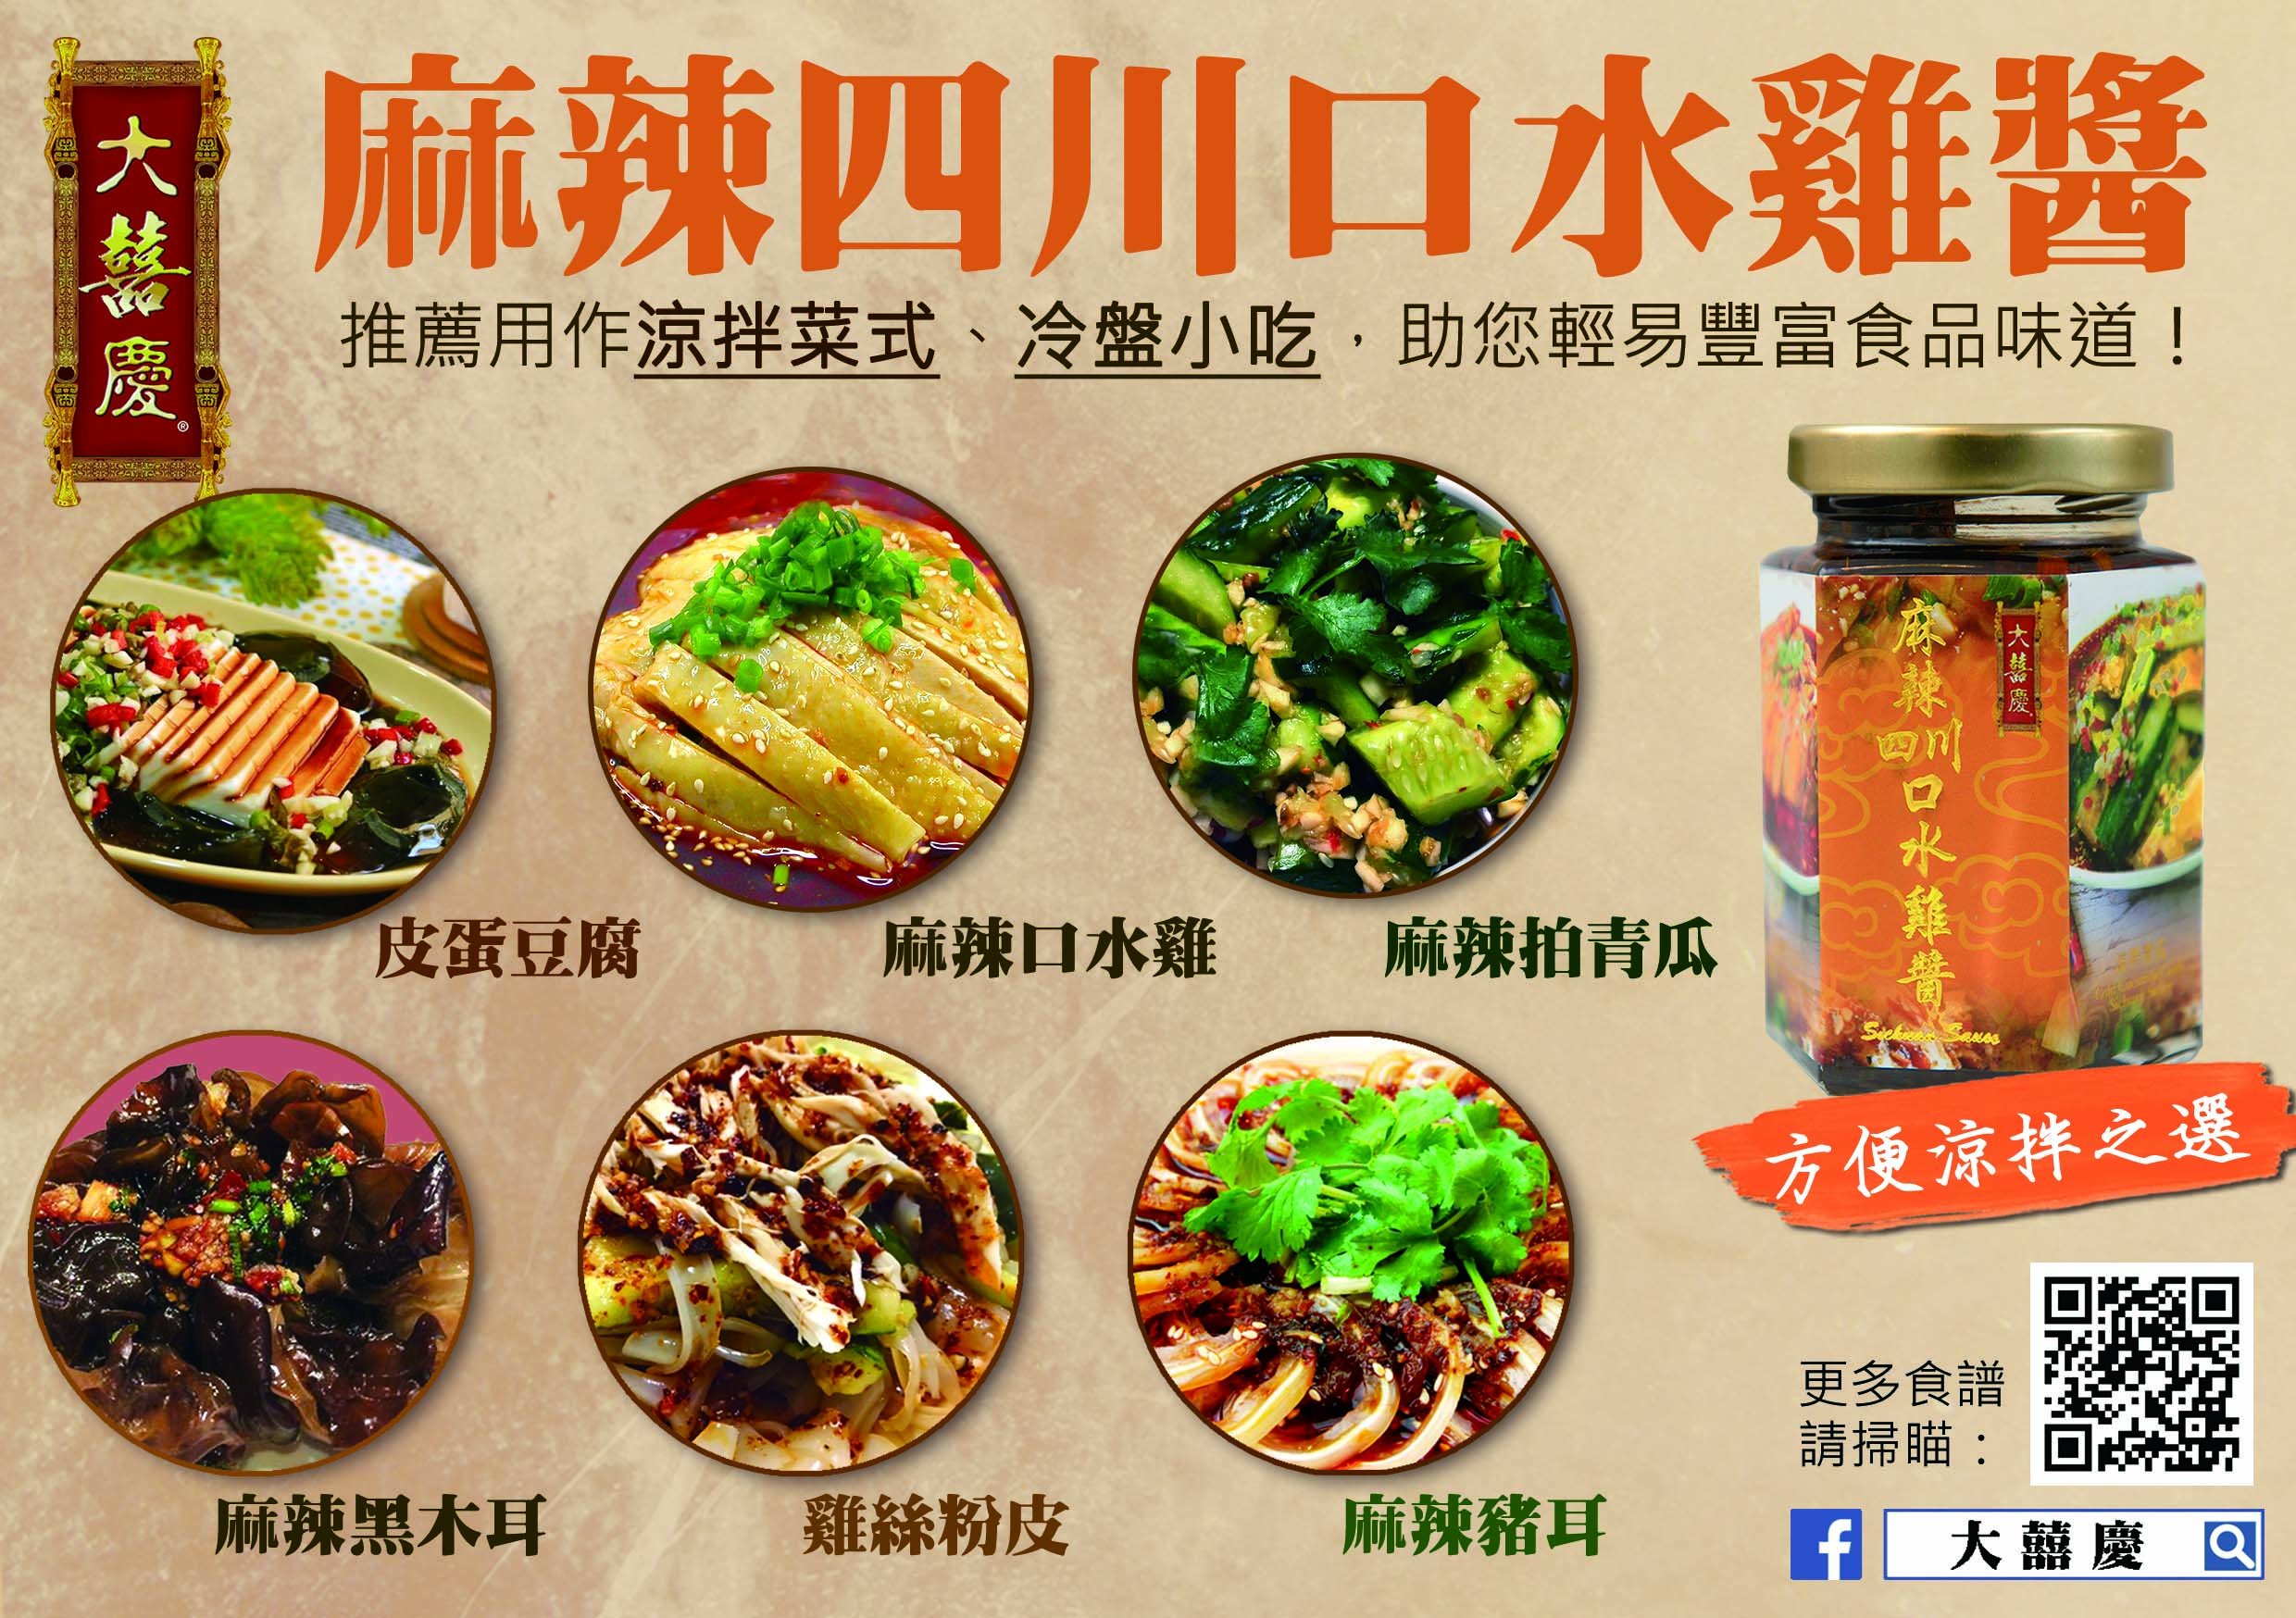 Tai-Hei-Hing-Sichuan-Sauce-pop